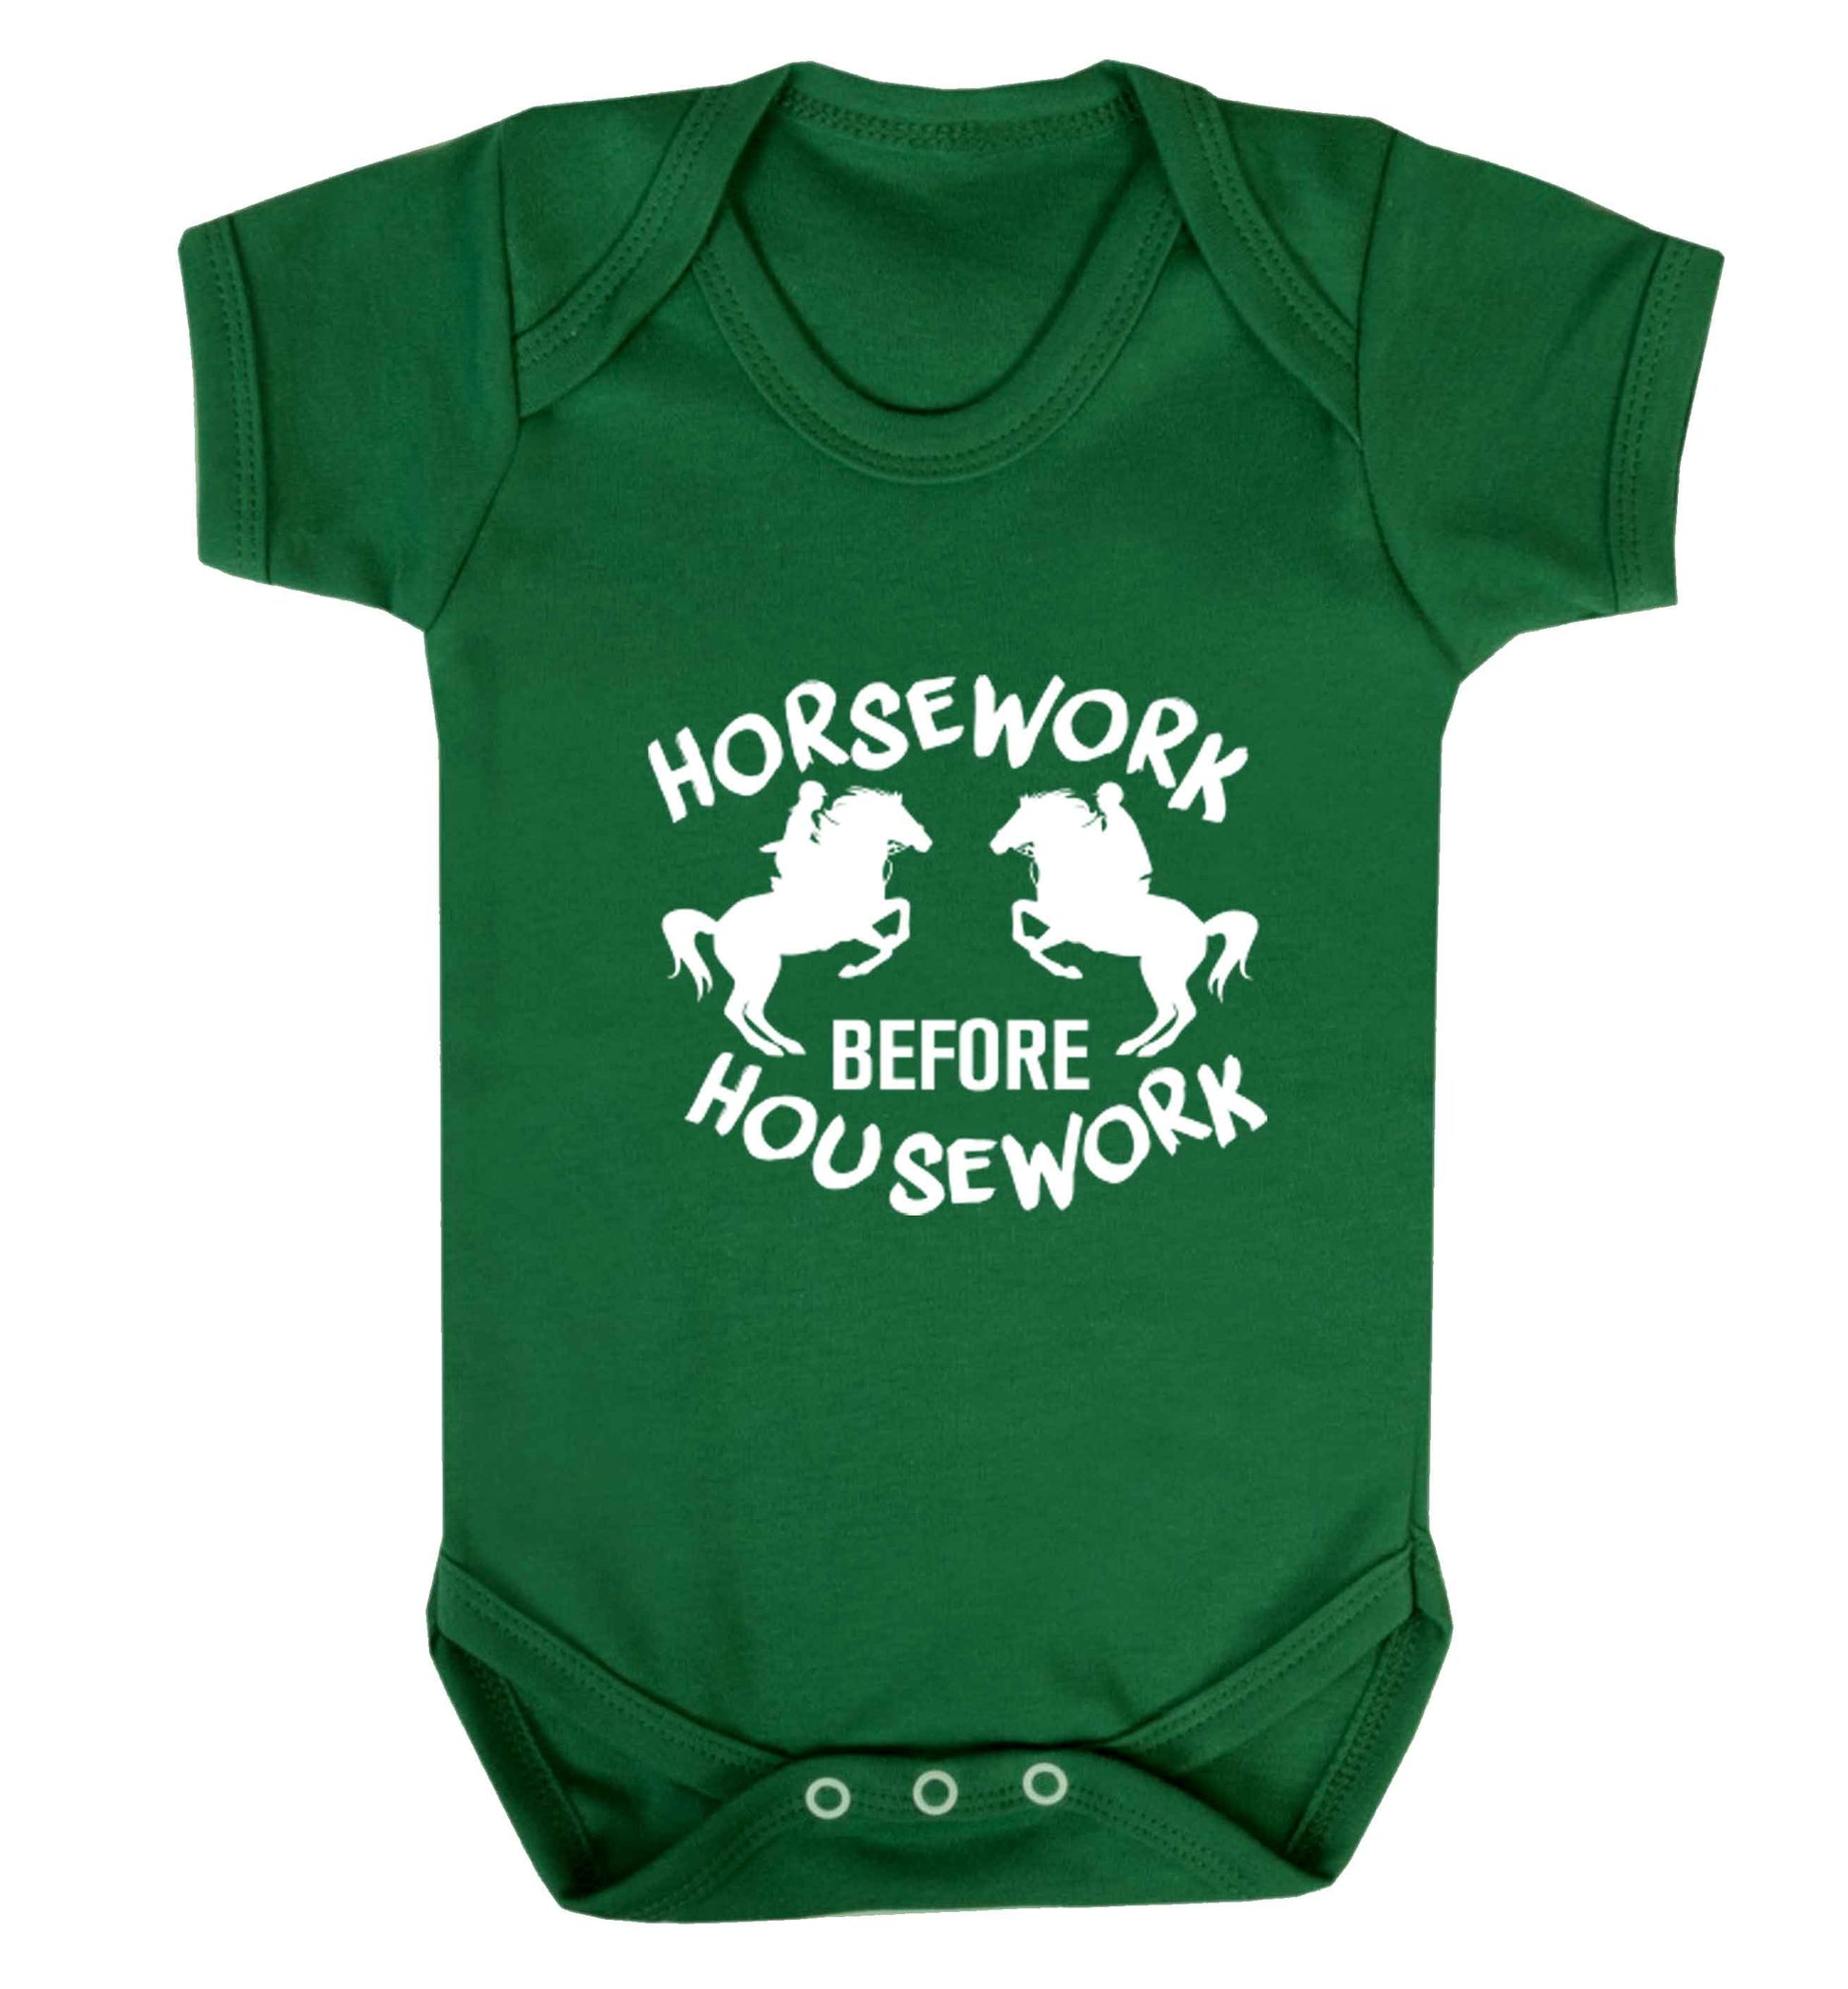 Horsework before housework baby vest green 18-24 months